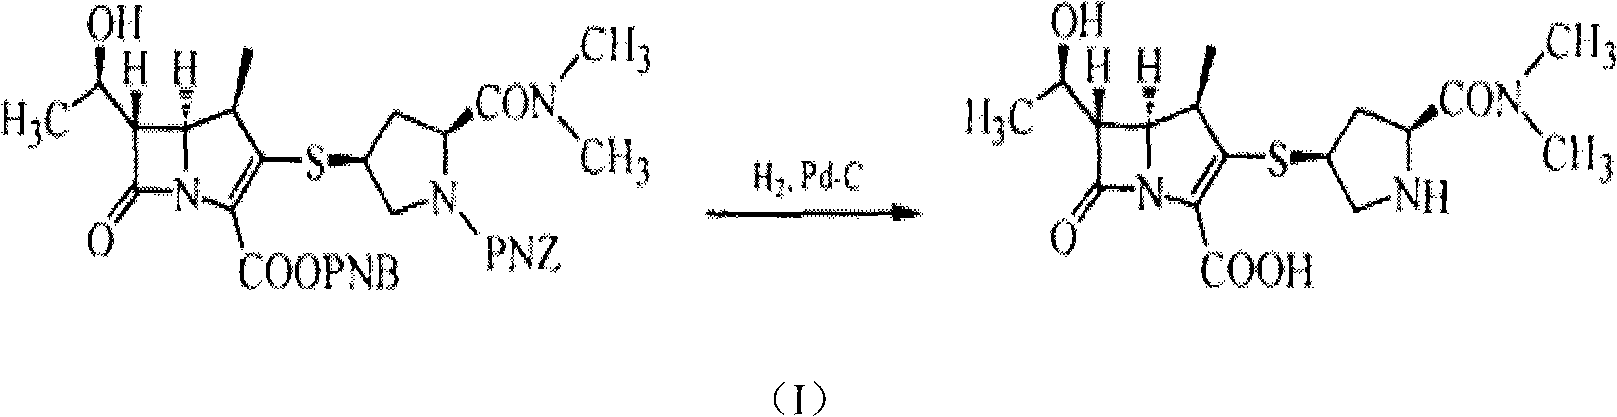 Palladium tin carbon catalyst for meropenem synthesis and preparation method